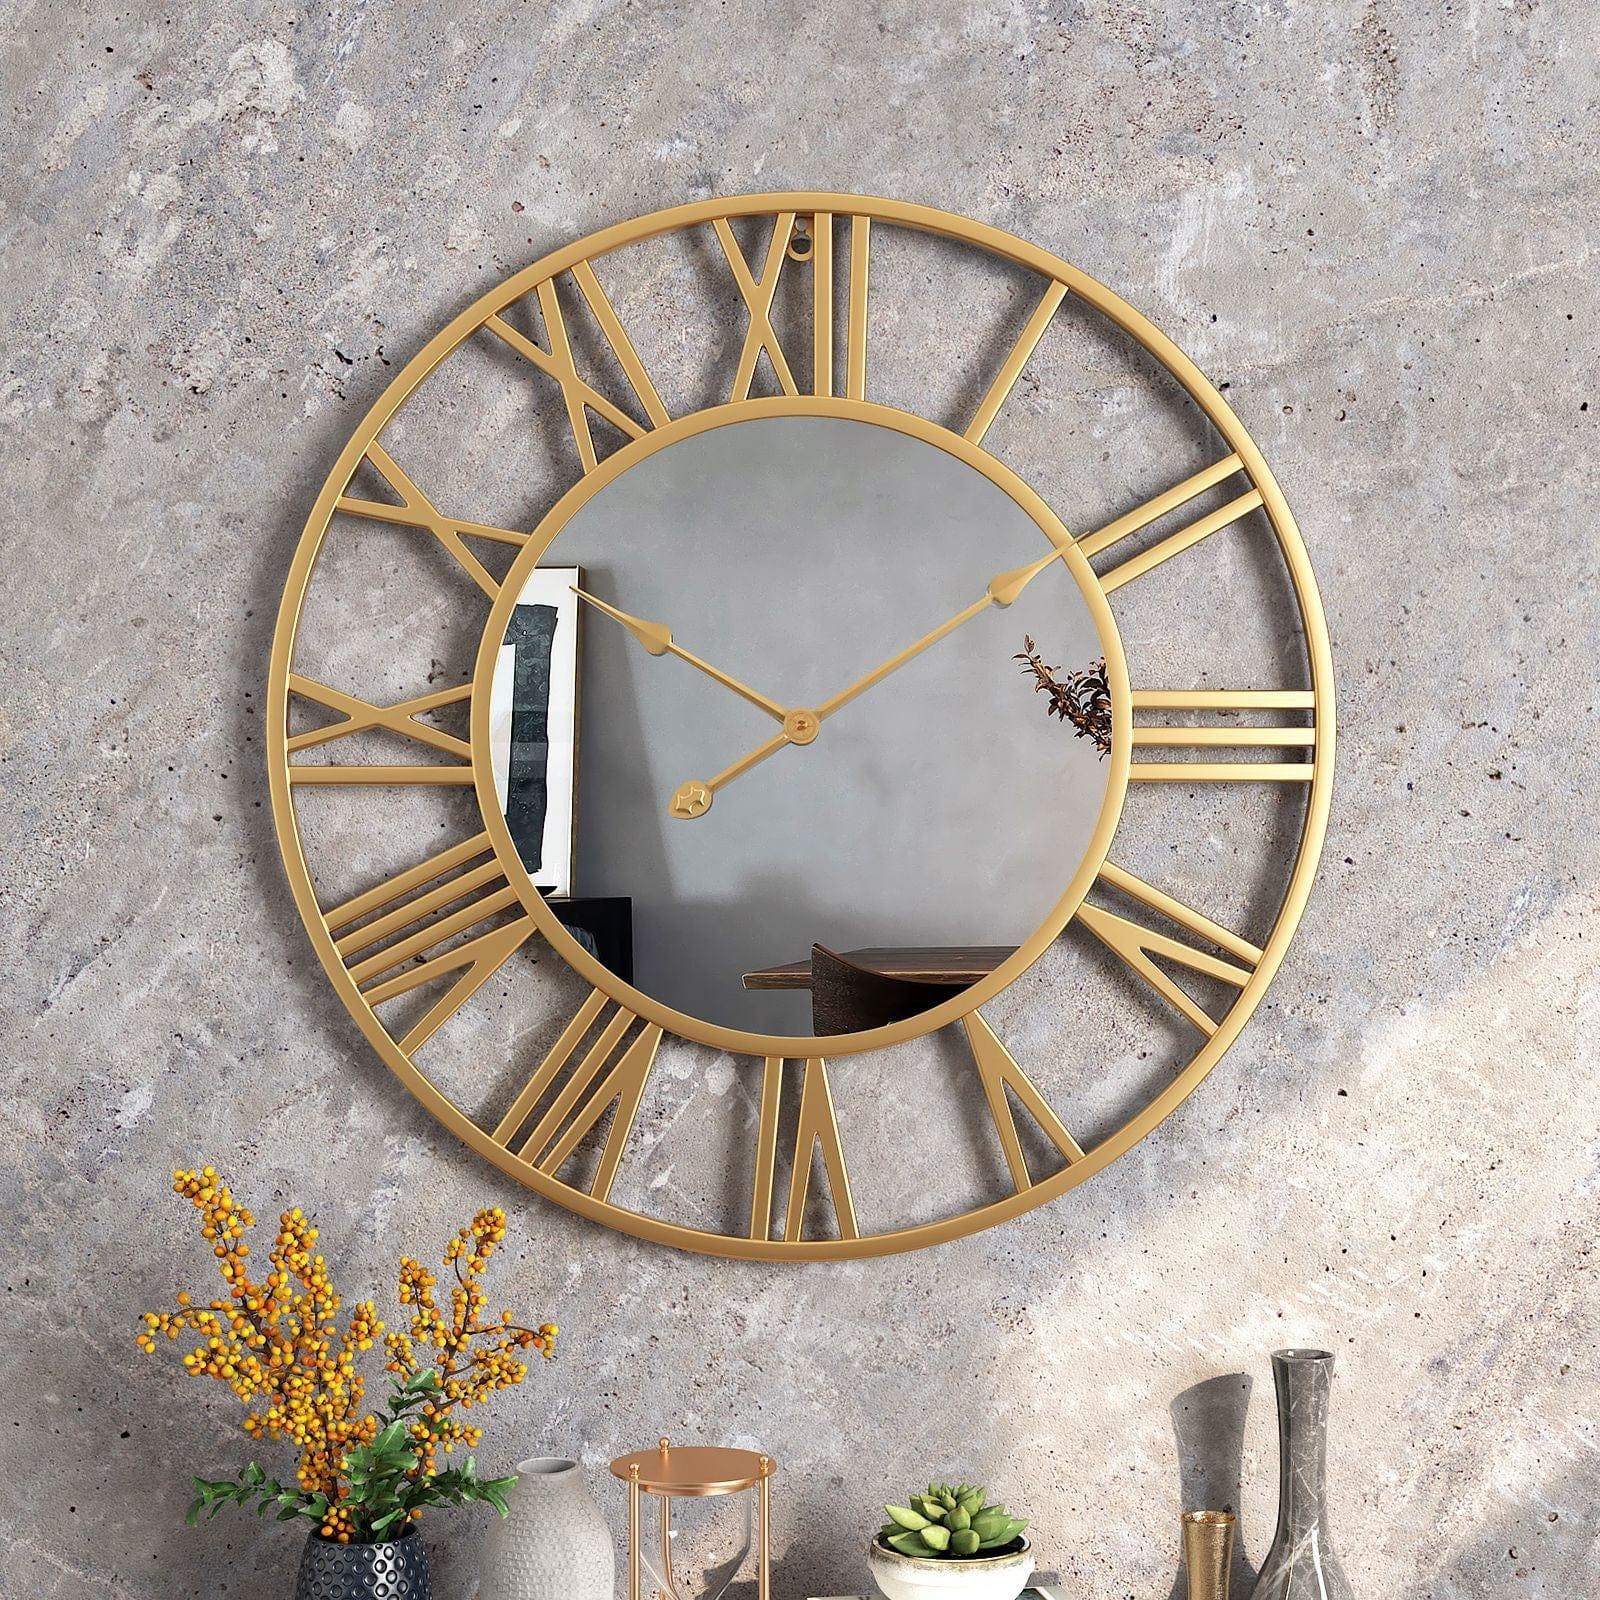 Shop 0 golden / 40cm Round Wall Clock Metal 15mm Large Golden Silent Wall Clock Modern Design Mirror Clocks Living Room Home Decoration Battery A Mademoiselle Home Decor